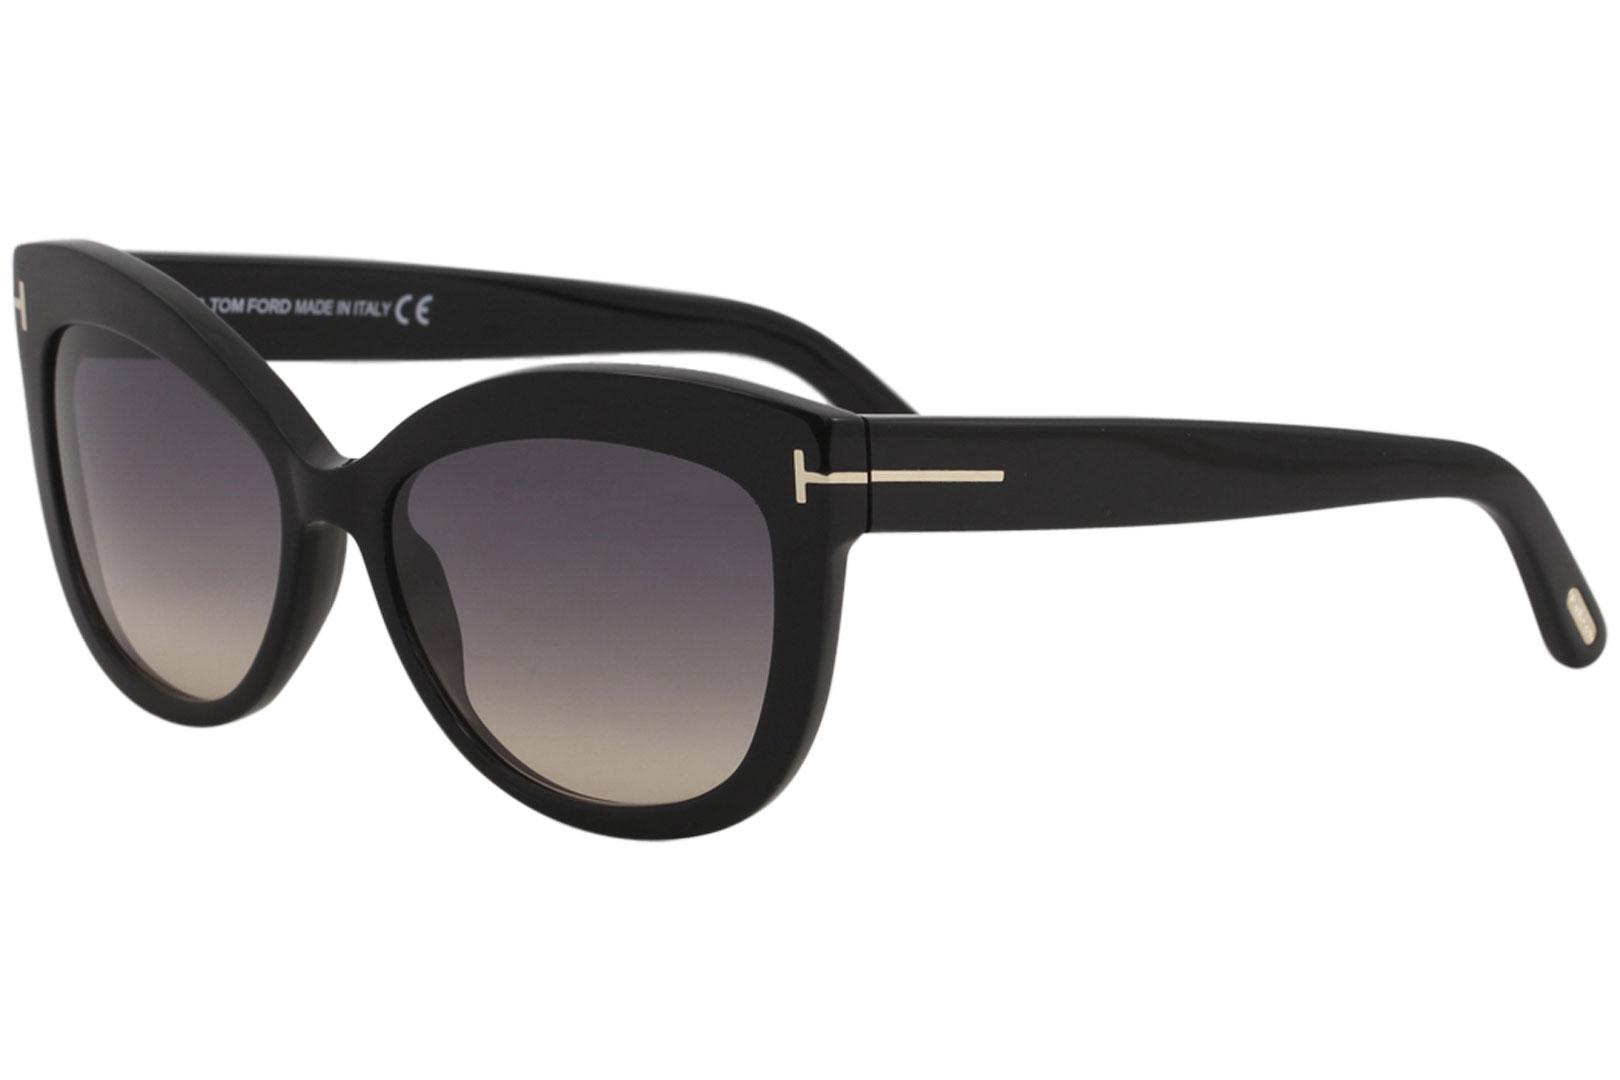 https://www.eyespecs.com/gallery-option/554277924/1/tom-ford-womens-alistair-tf524-tf-524-fashion-butterfly-sunglasses-shiny-black-smoke-gradient-05b-1.jpg